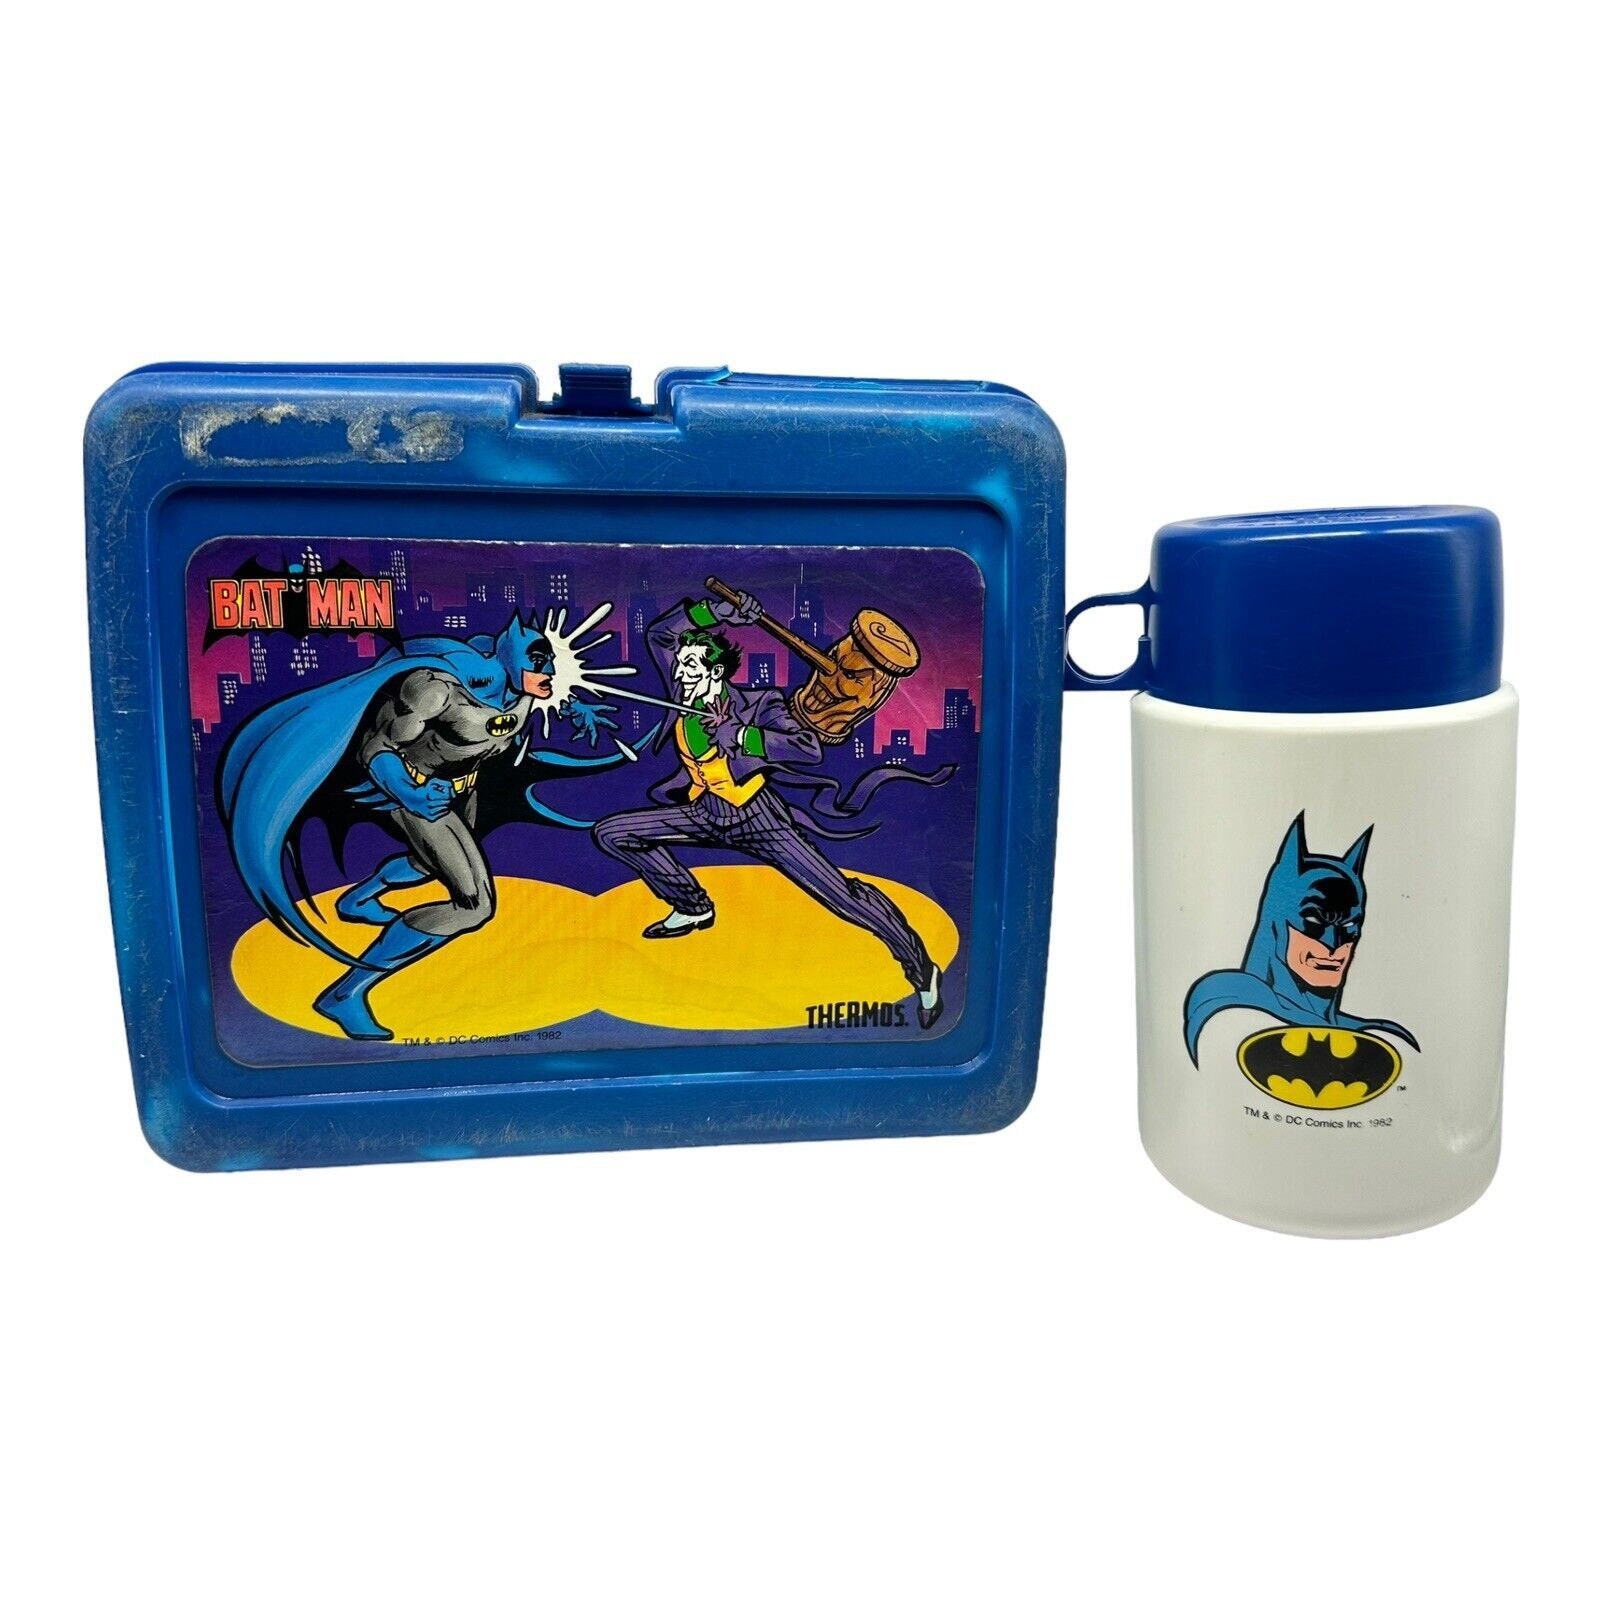 Vintage Batman Lunchbox NO Thermosblack Plastic School Lunch Box DC Comics  Superhero Panchosporch 